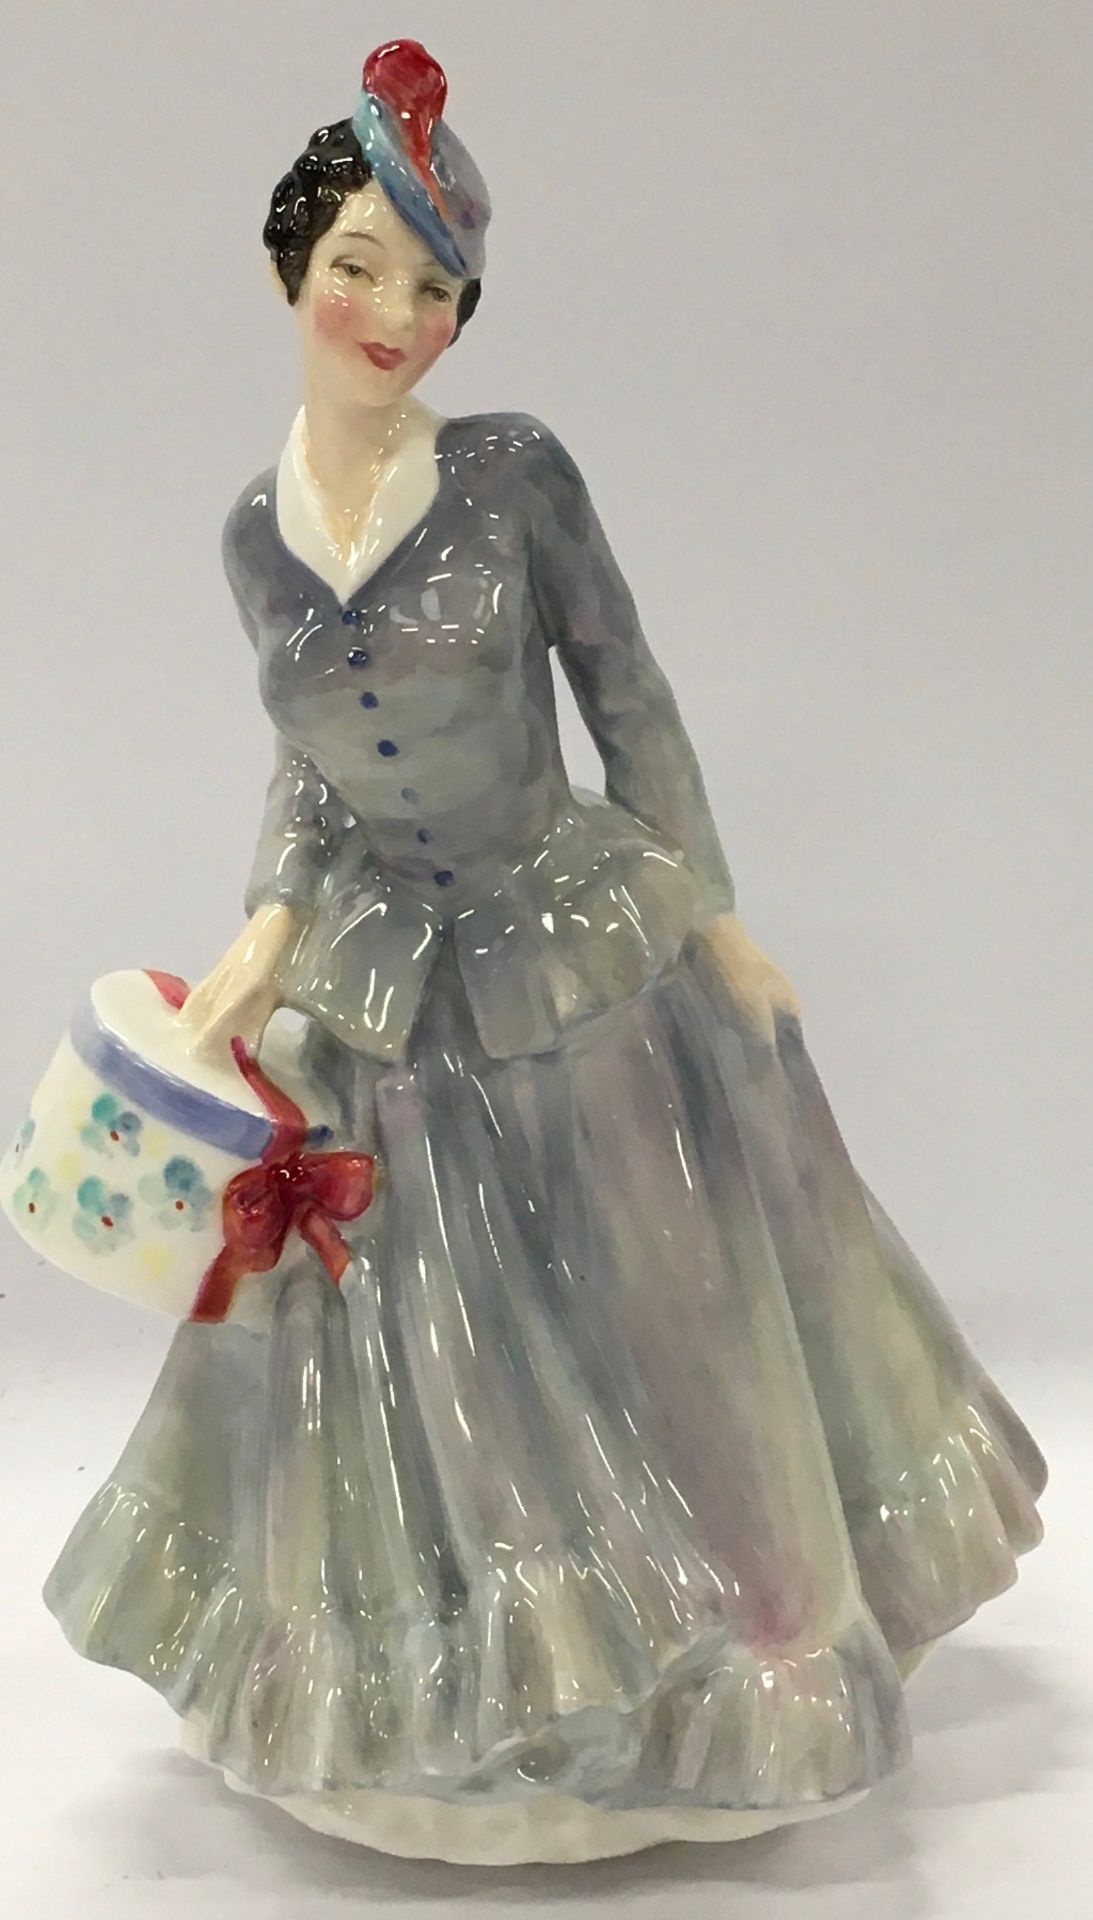 Royal Doulton figurine HN 2090 "Midinette: 1952-1965 - Designer L Harradine.